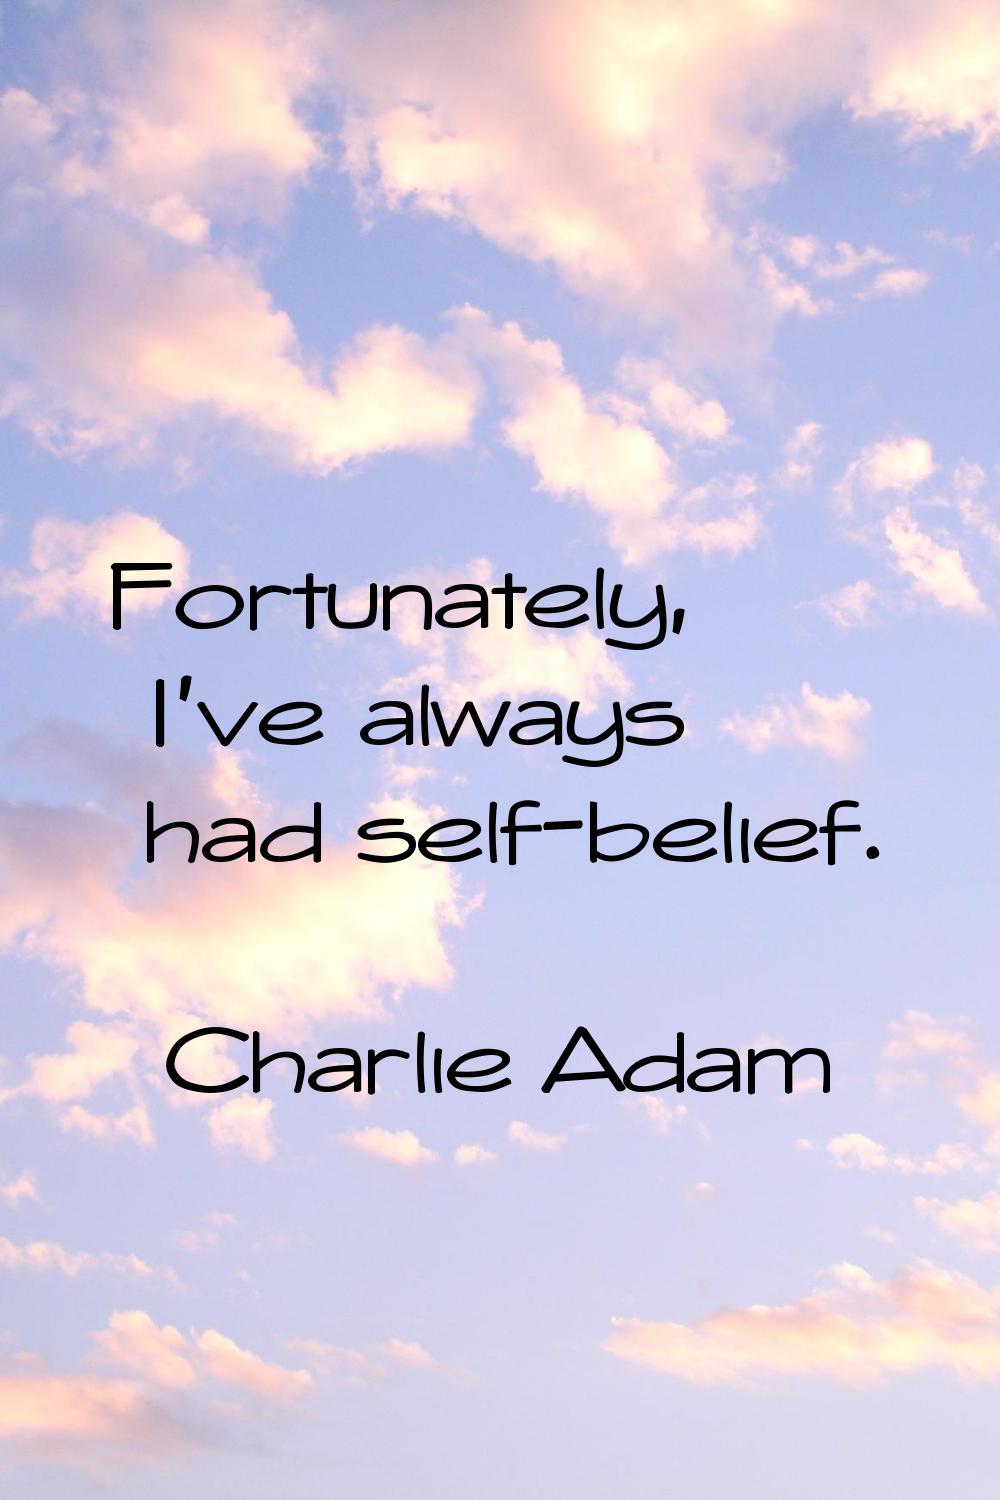 Fortunately, I've always had self-belief.